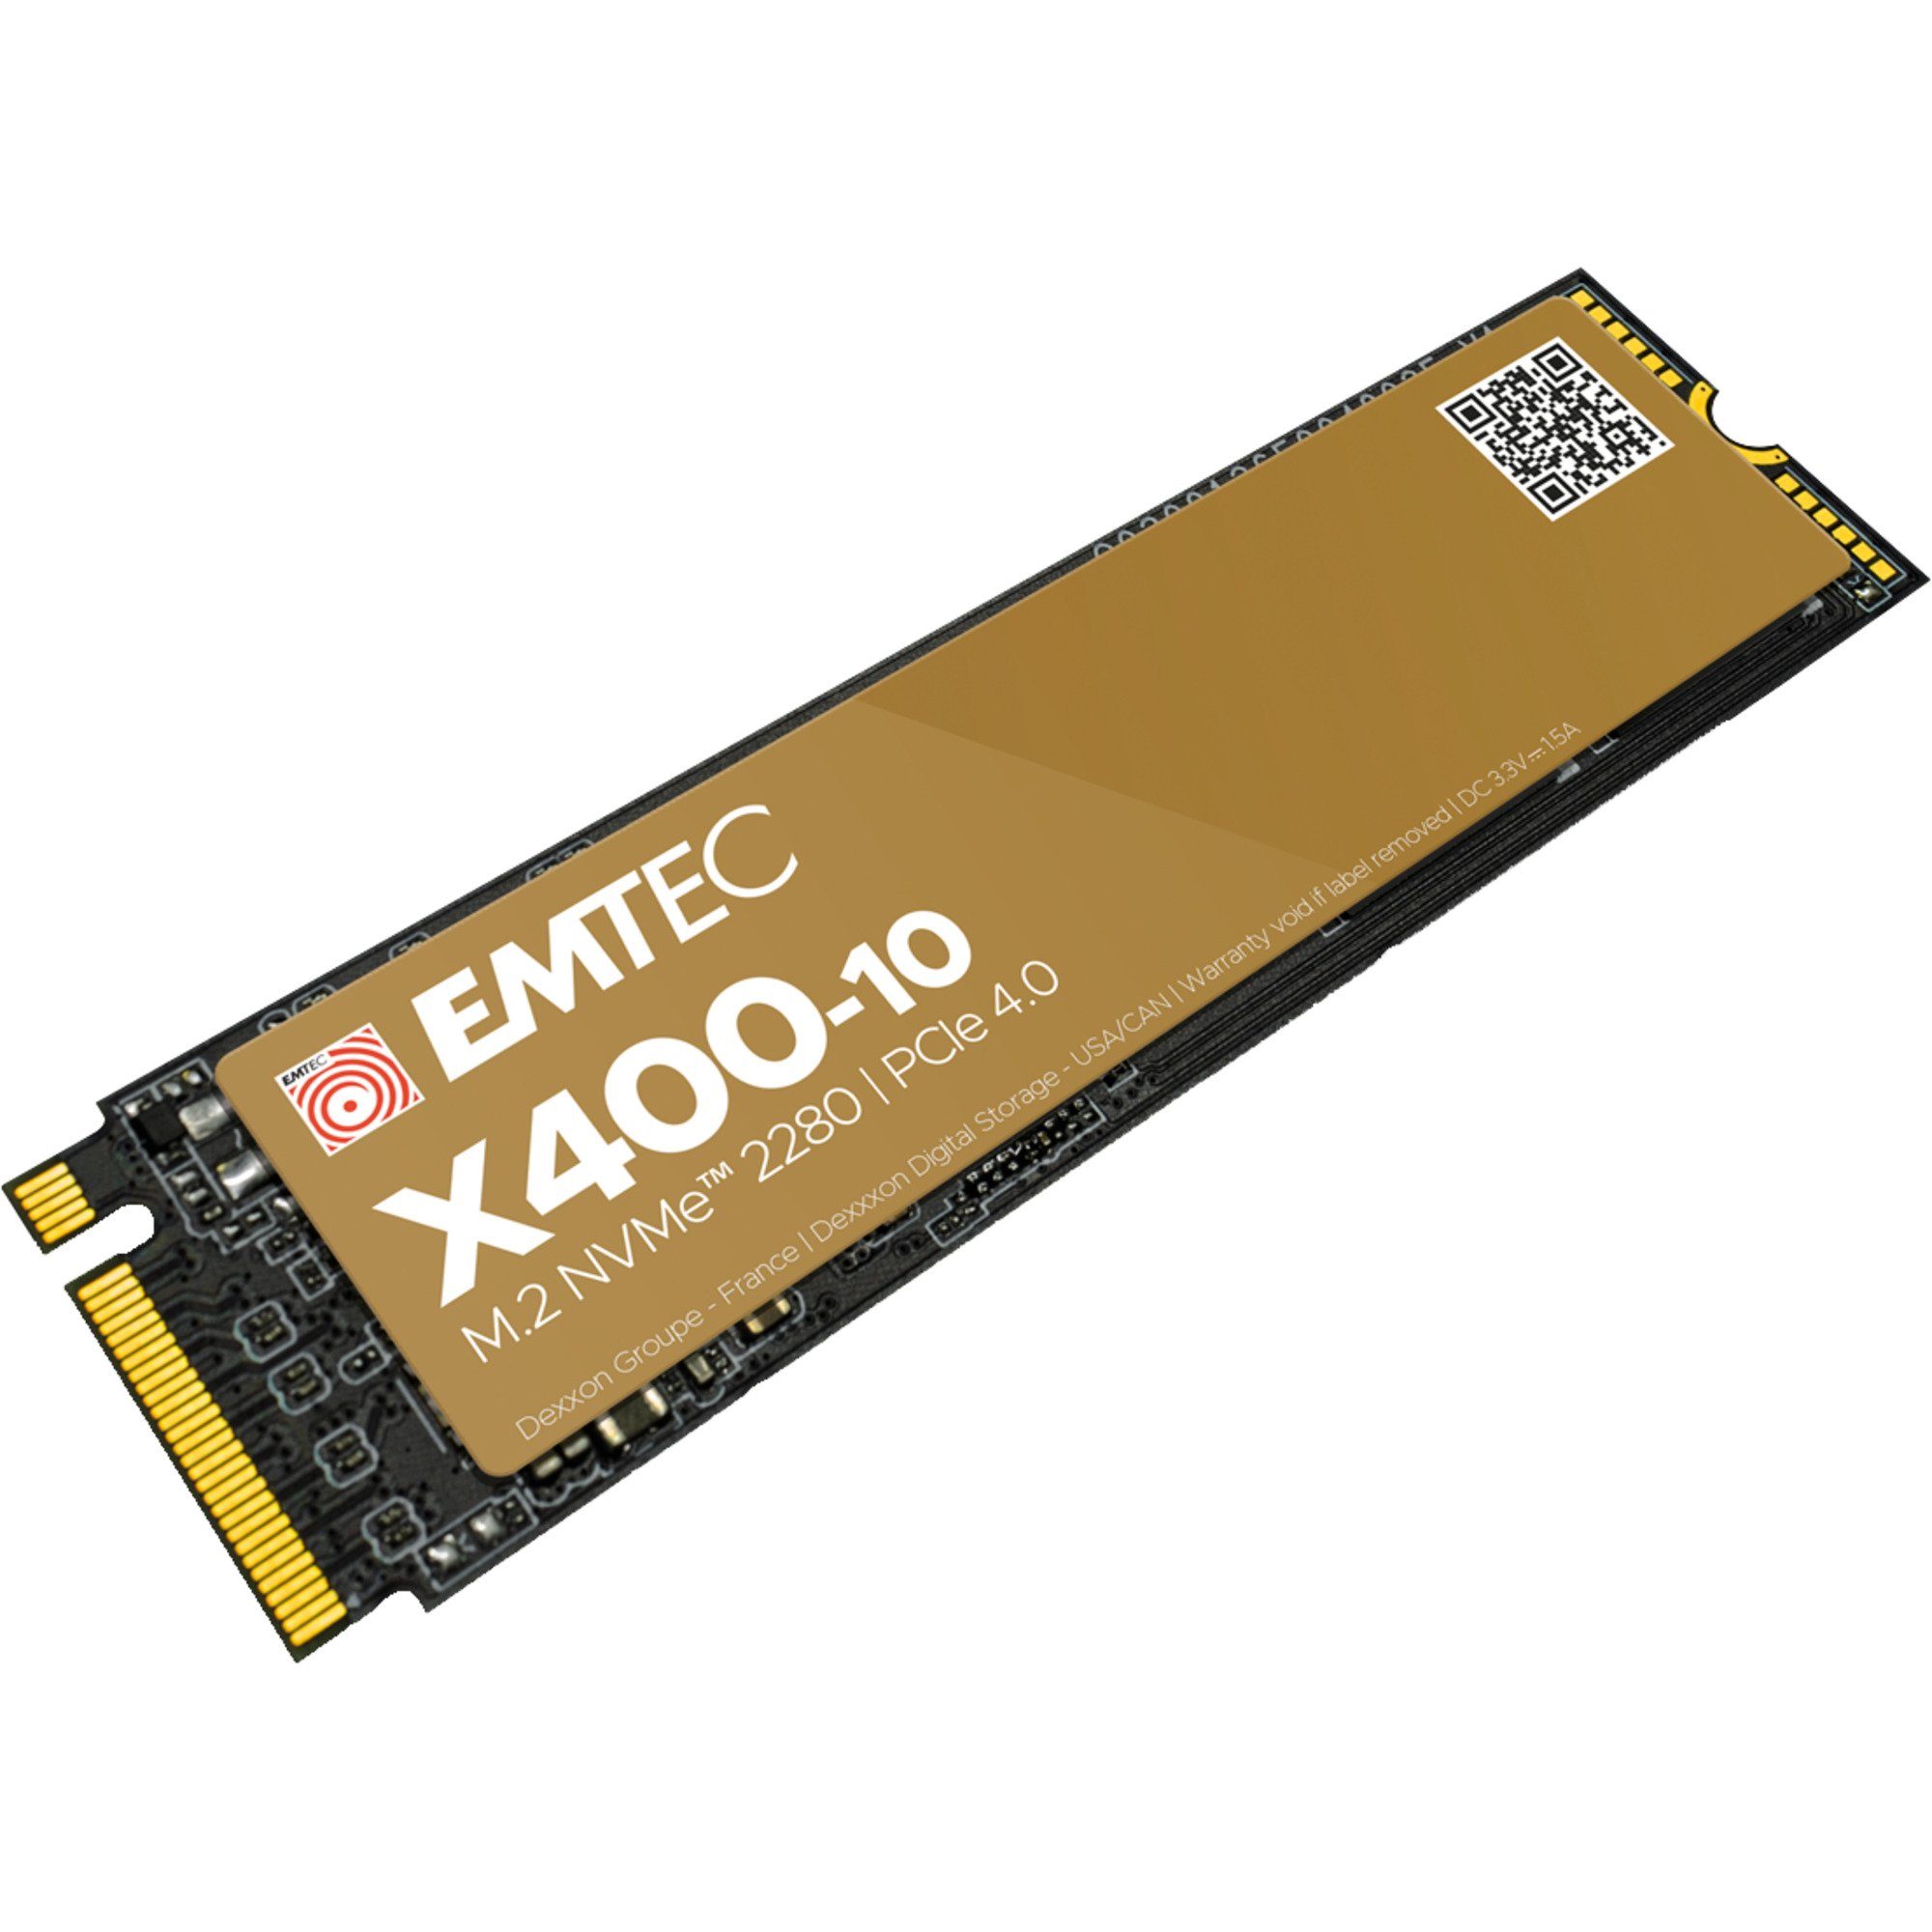 EMTEC X400-10 SSD Power Pro 4 TB SSD-Festplatte